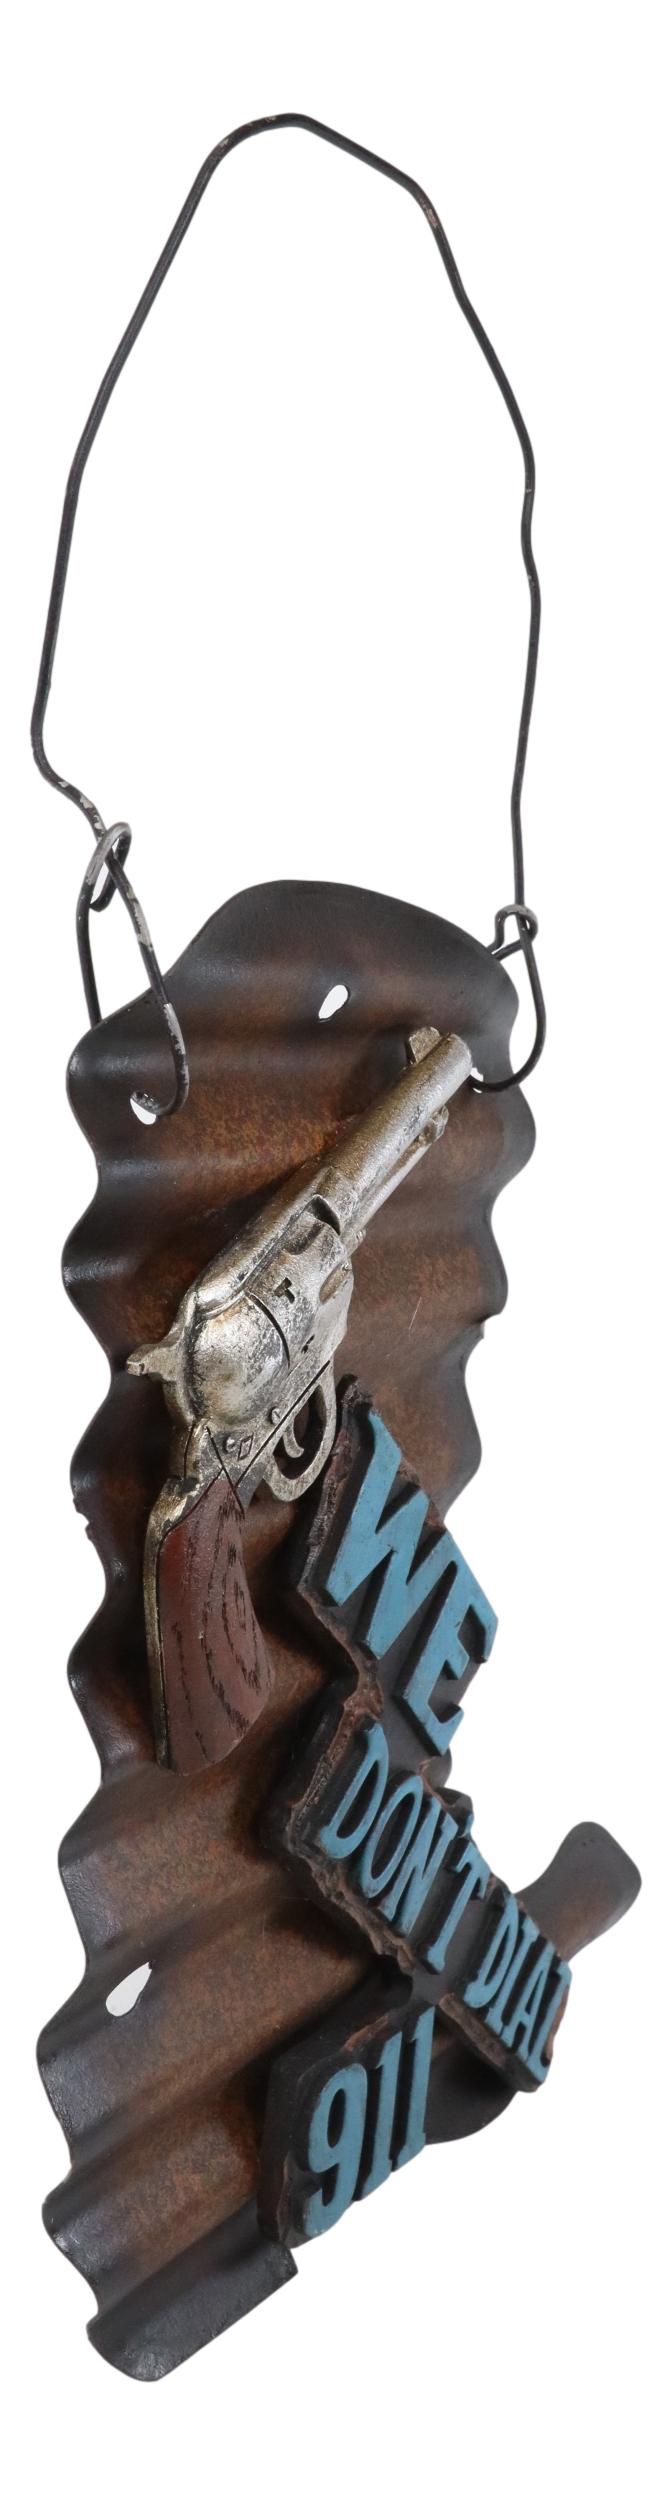 Western We Don't Dial 911 Pistol Gun Cowboy Boot Galvanized Metal Wall Decor